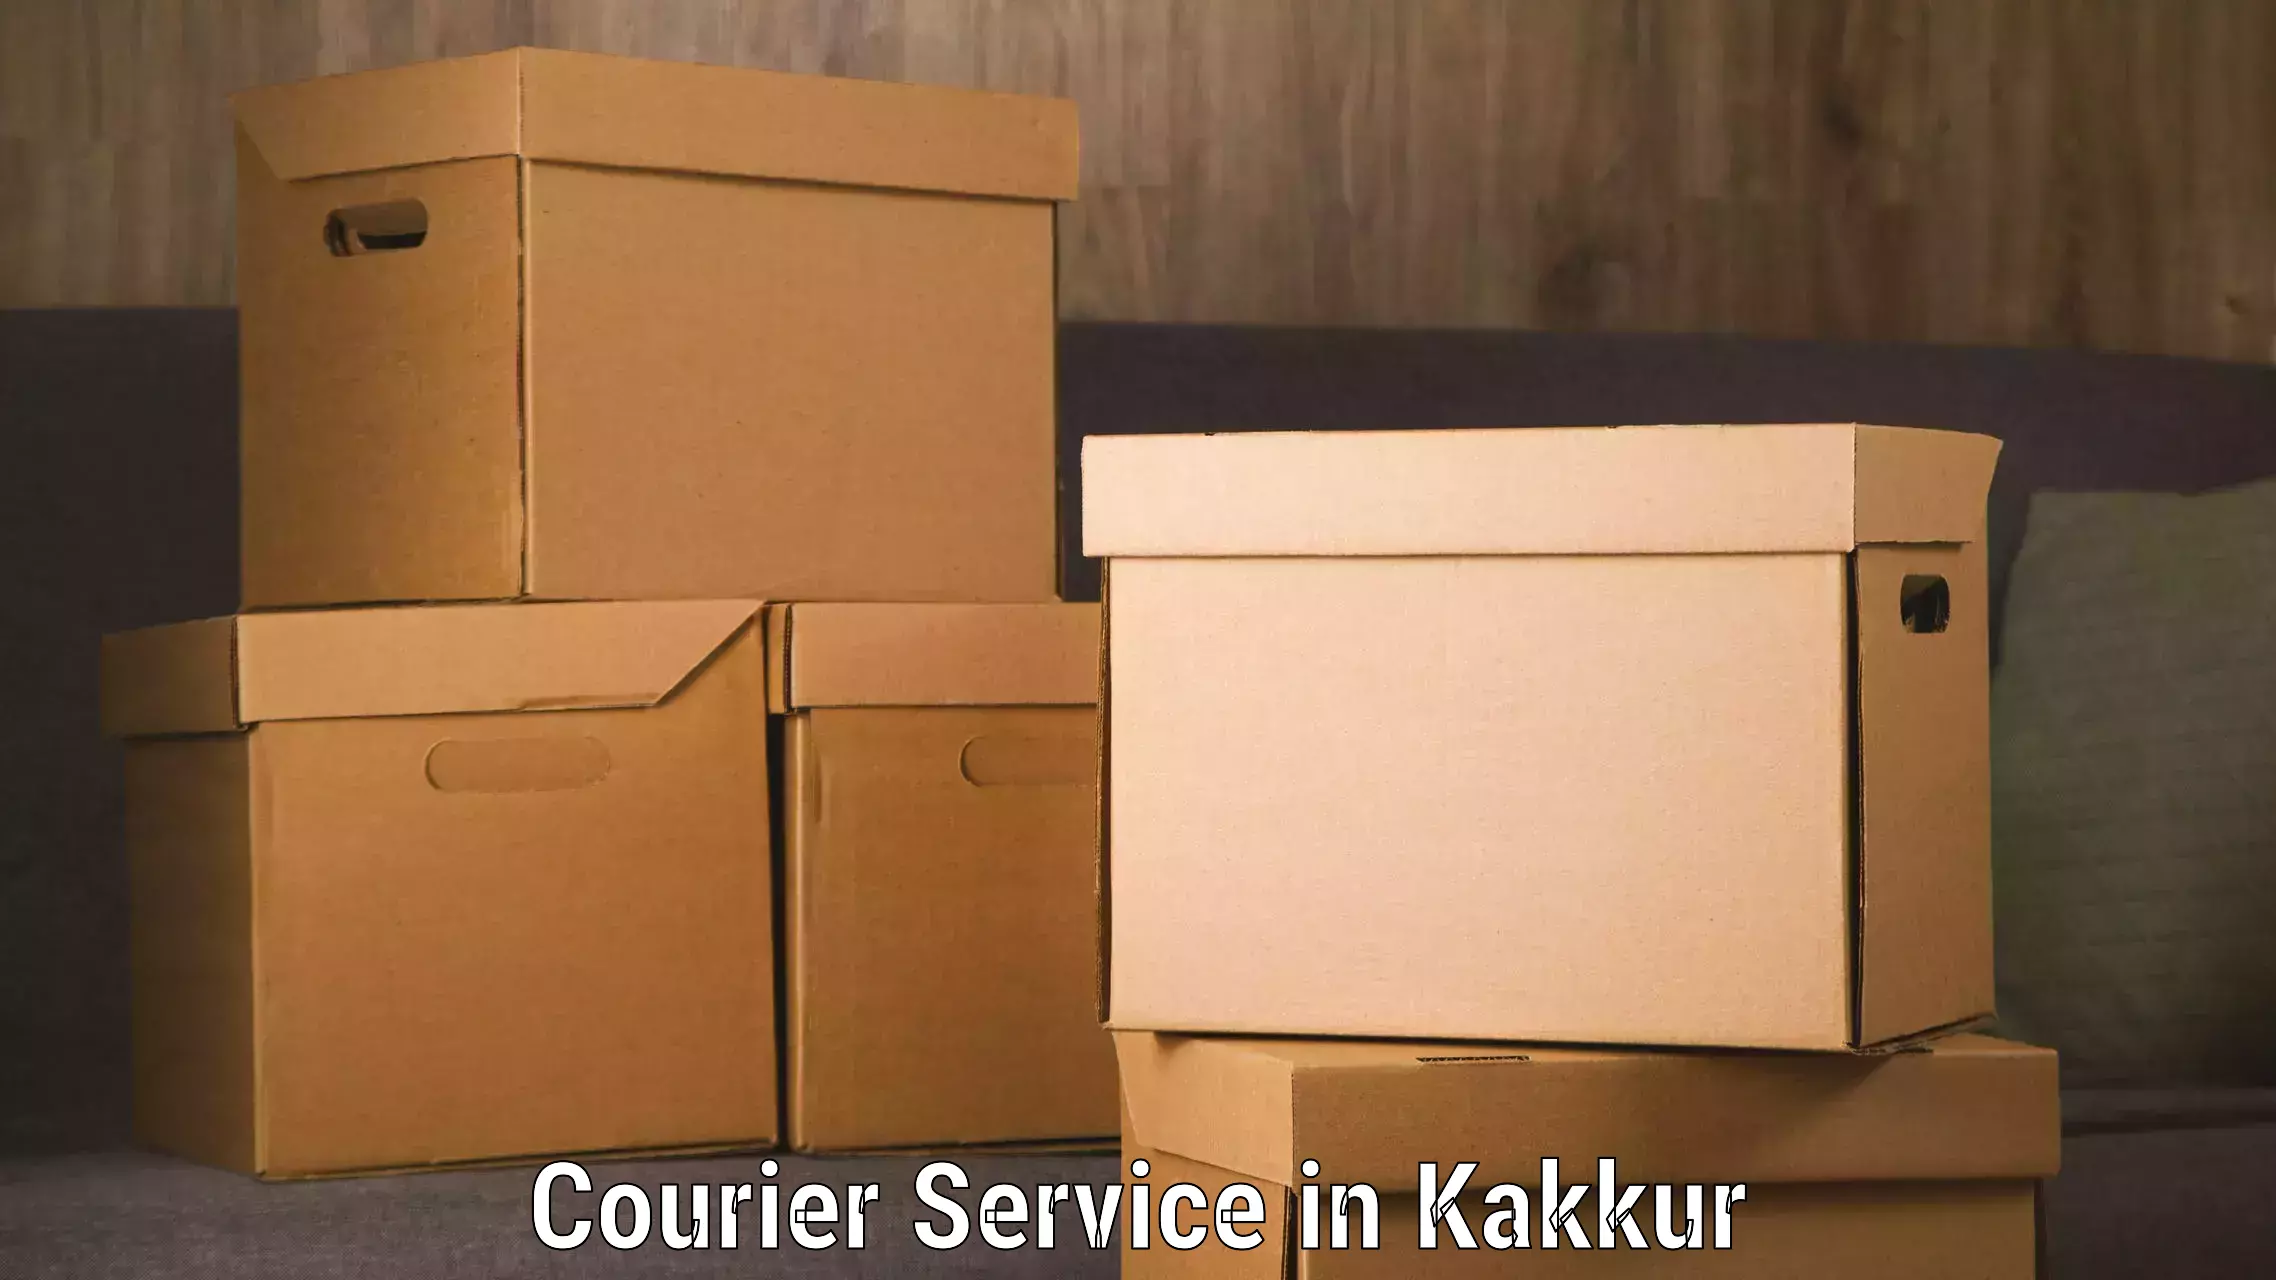 High-efficiency logistics in Kakkur